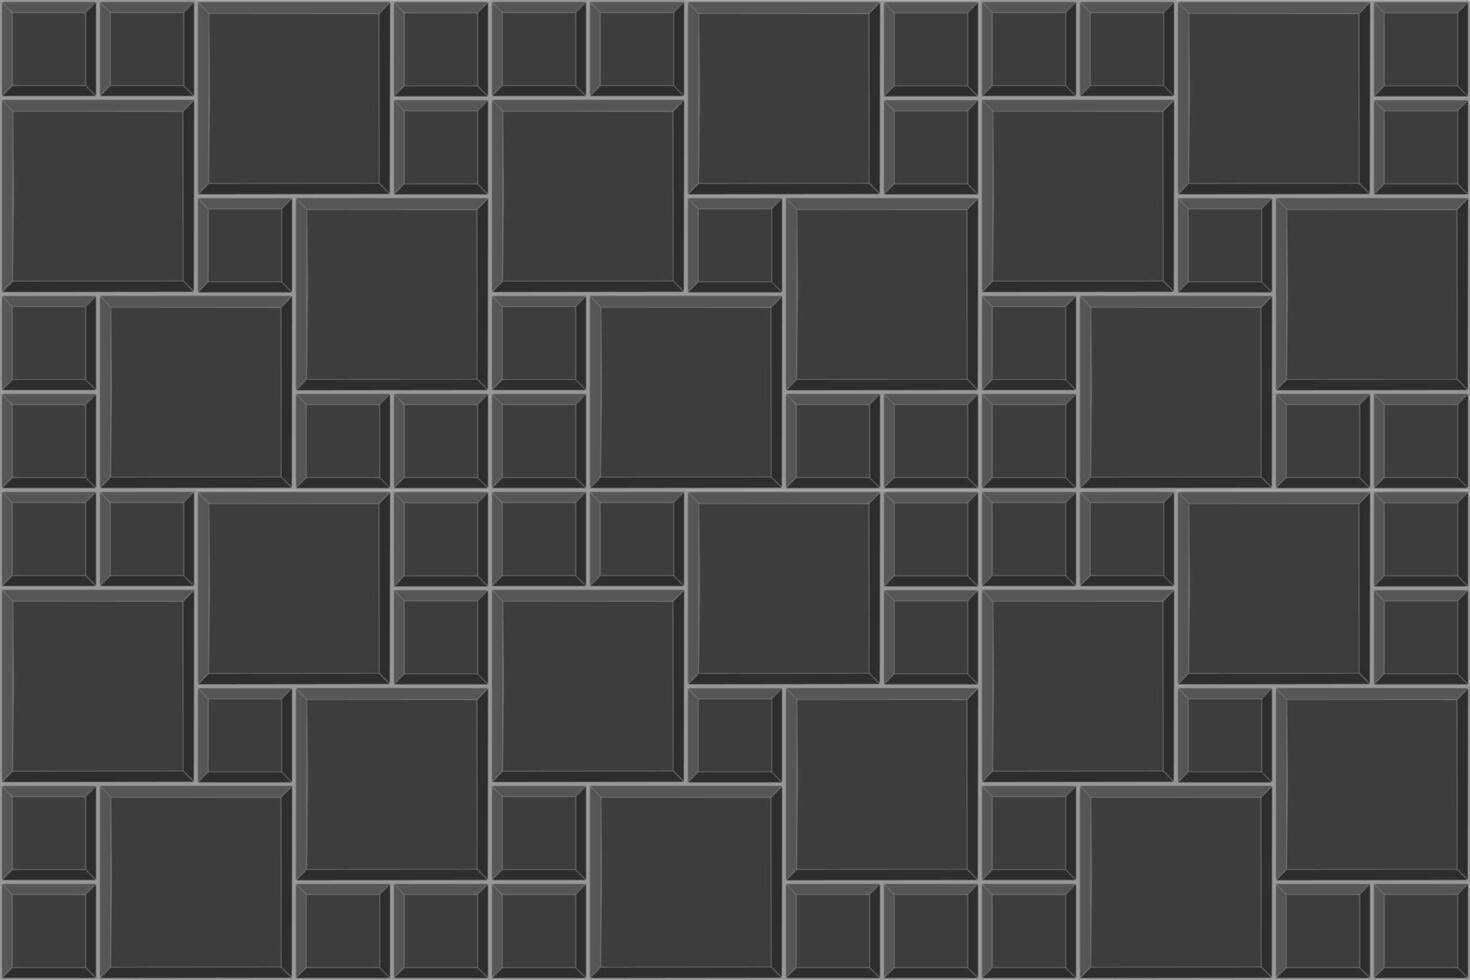 Black multi pinwheel tile pattern. Kitchen backsplash mosaic surface. Bathroom, shower or toilet floor decoration. Pavement texture. Stone or ceramic brick wall background vector